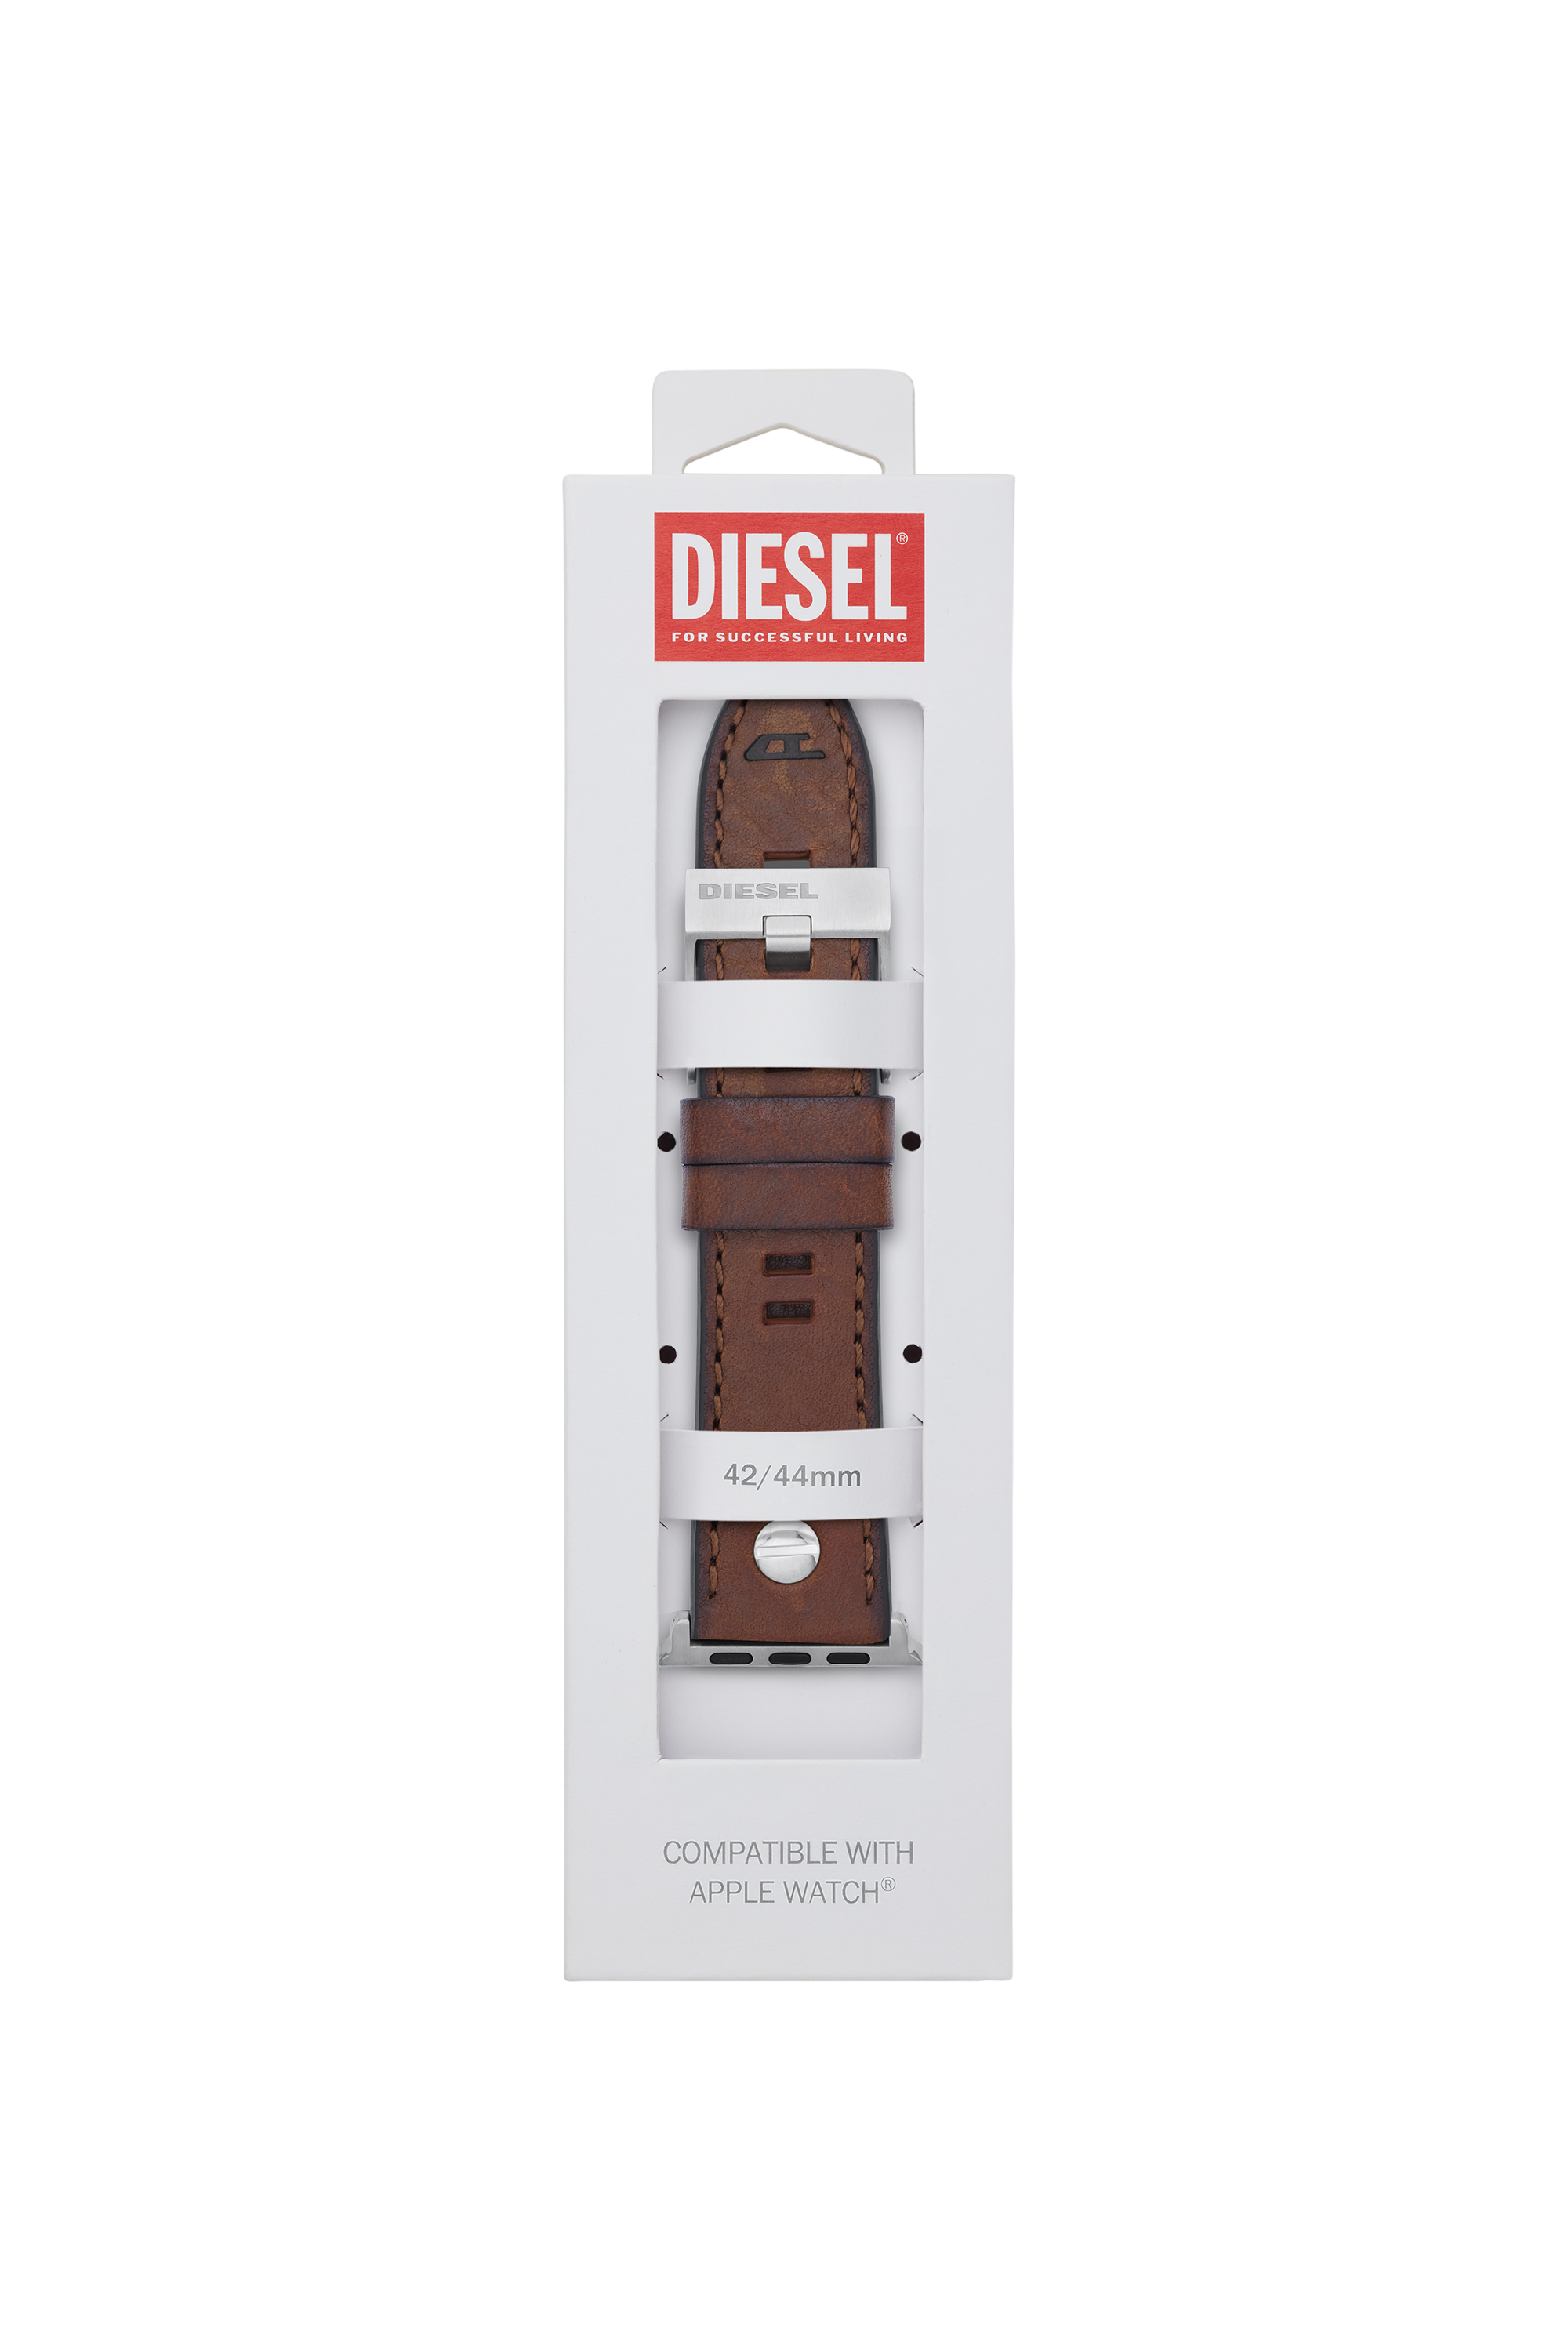 Diesel - DSS002, Marron - Image 2